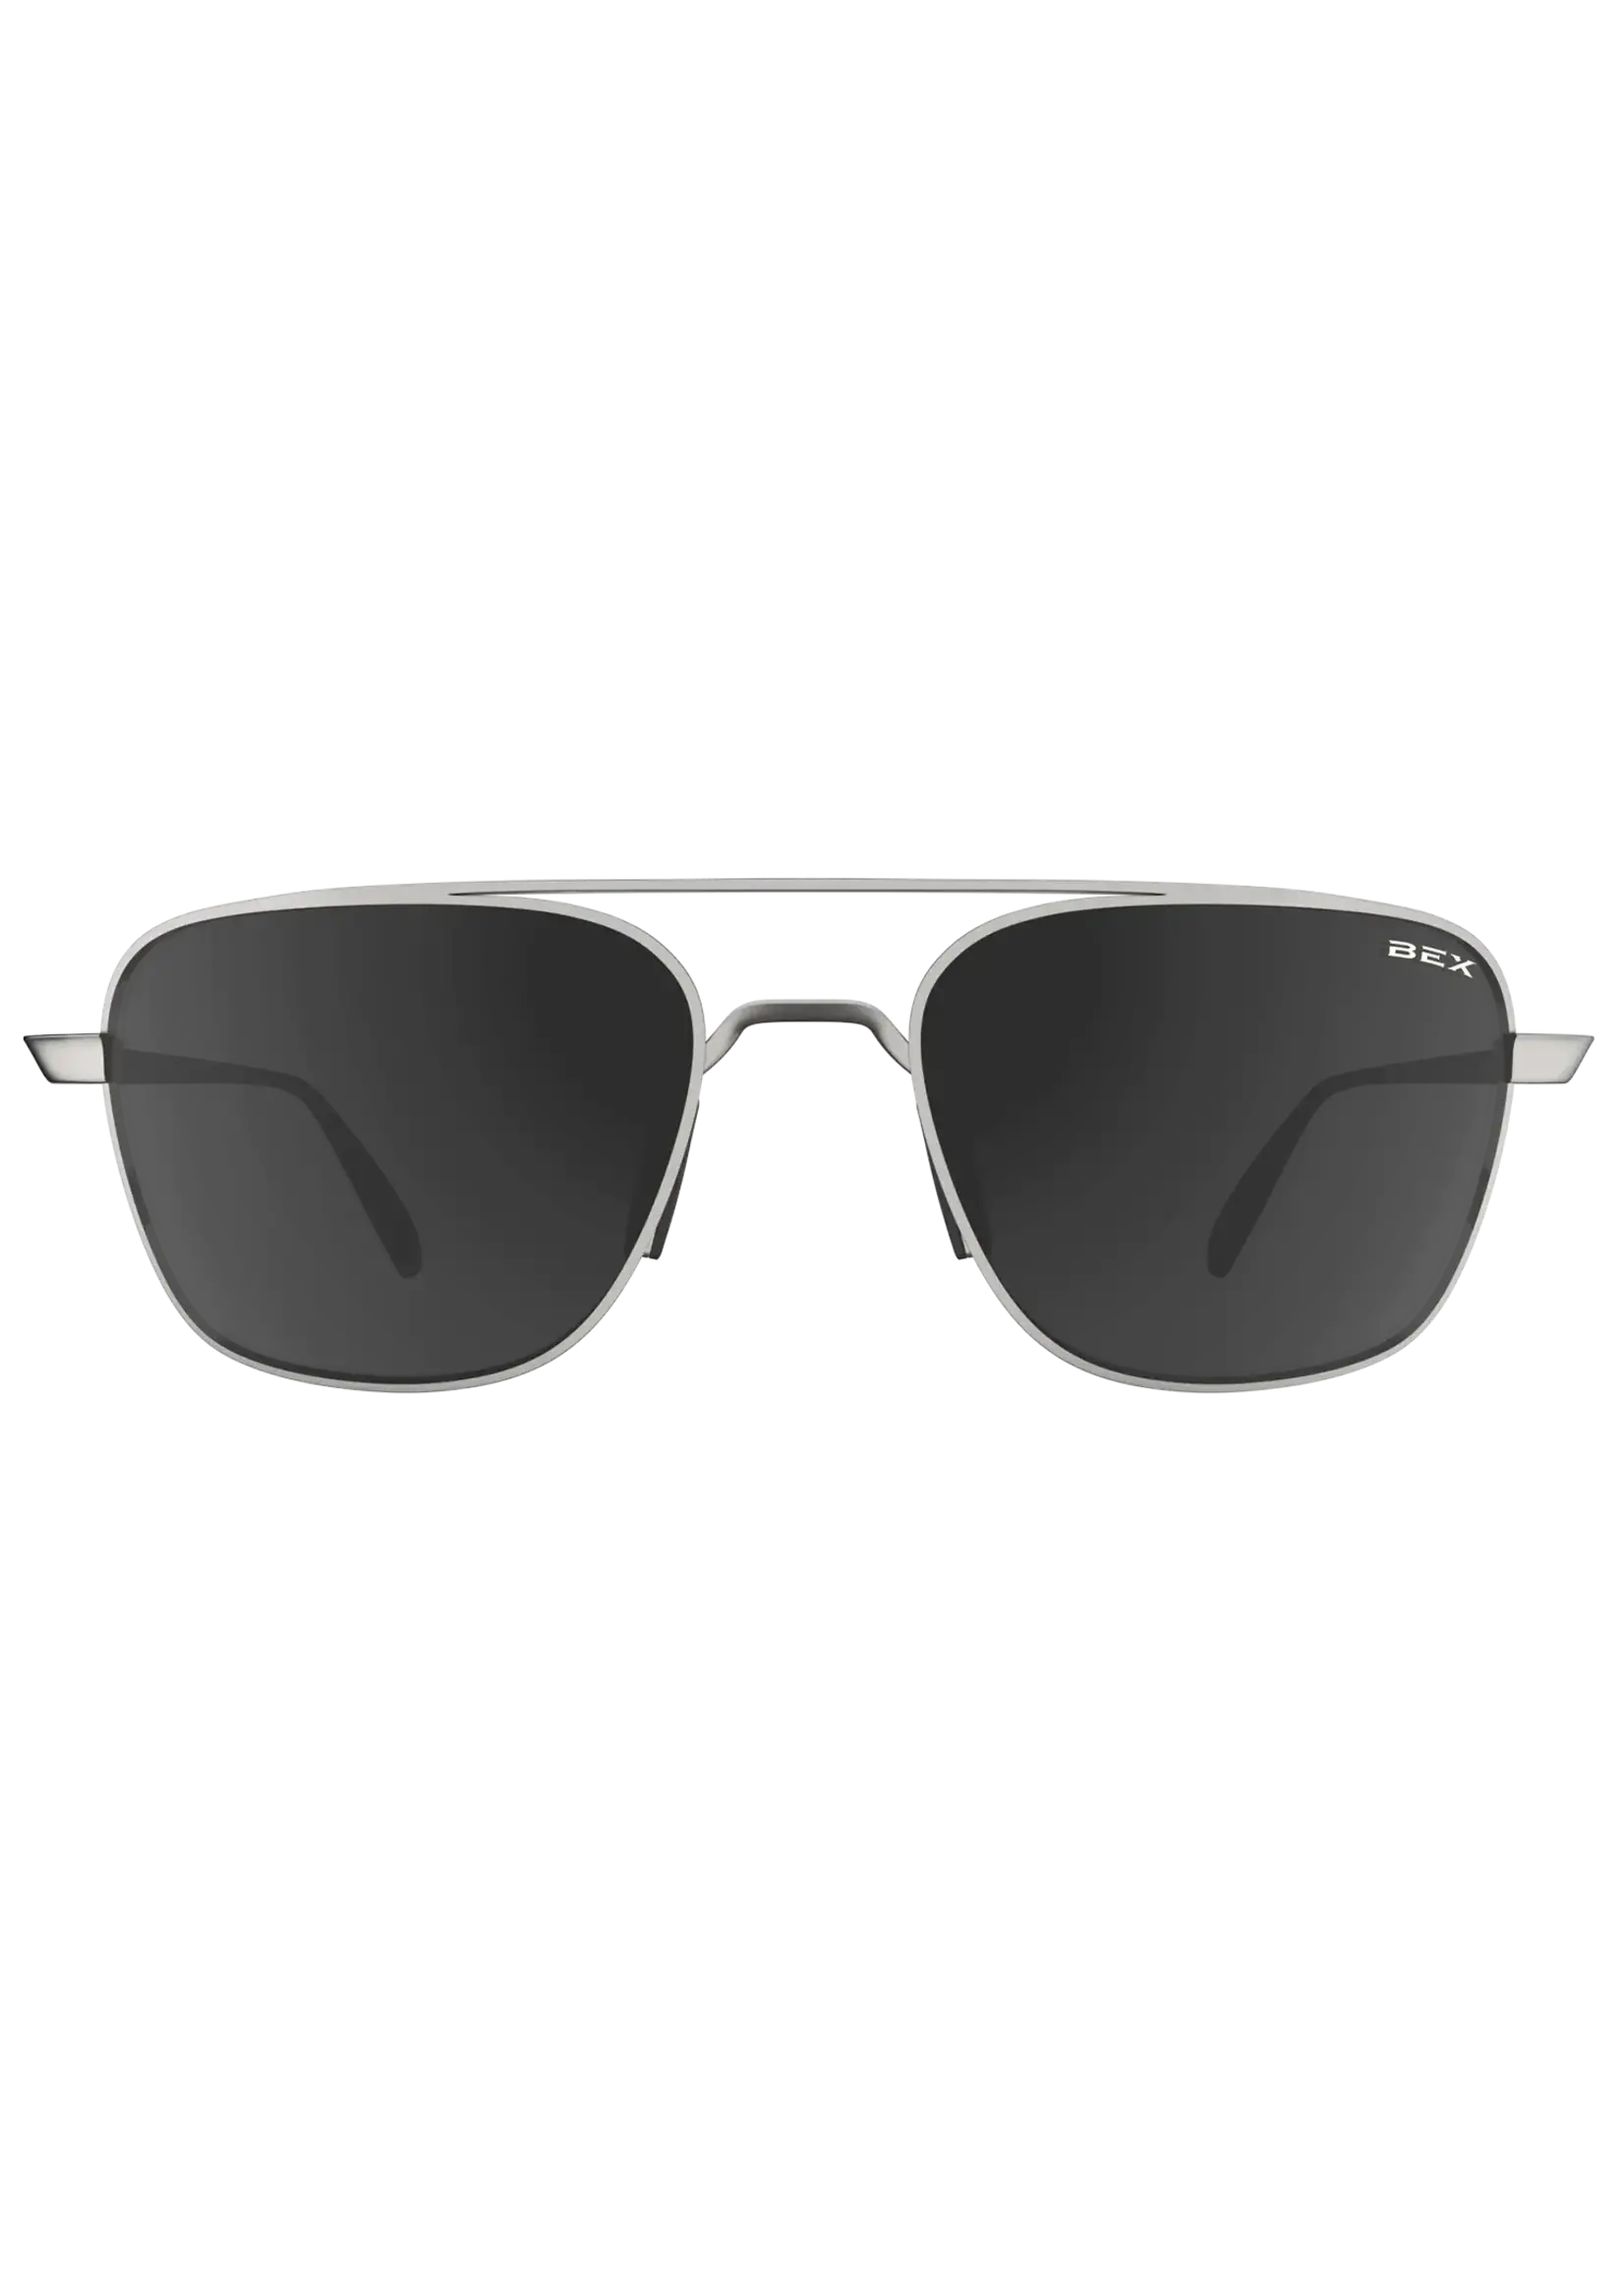 Bex Sunglasses Bex Sunglasses - Mach -